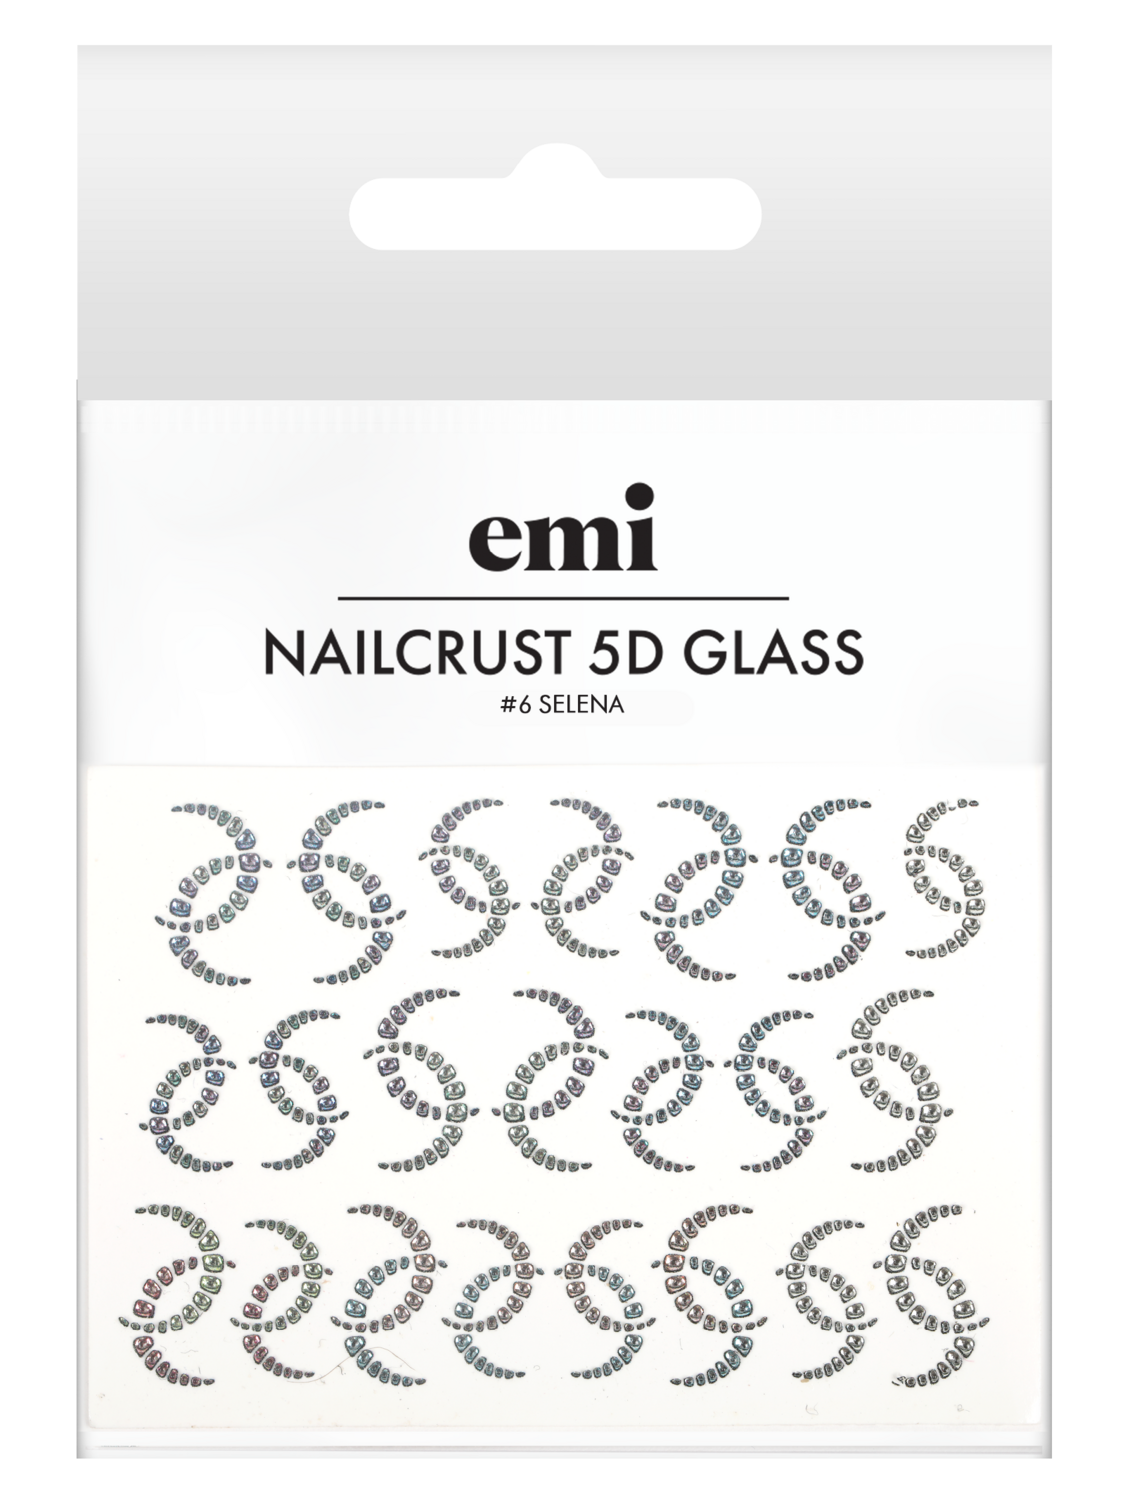 NAILCRUST 5D GLASS #6 Selena